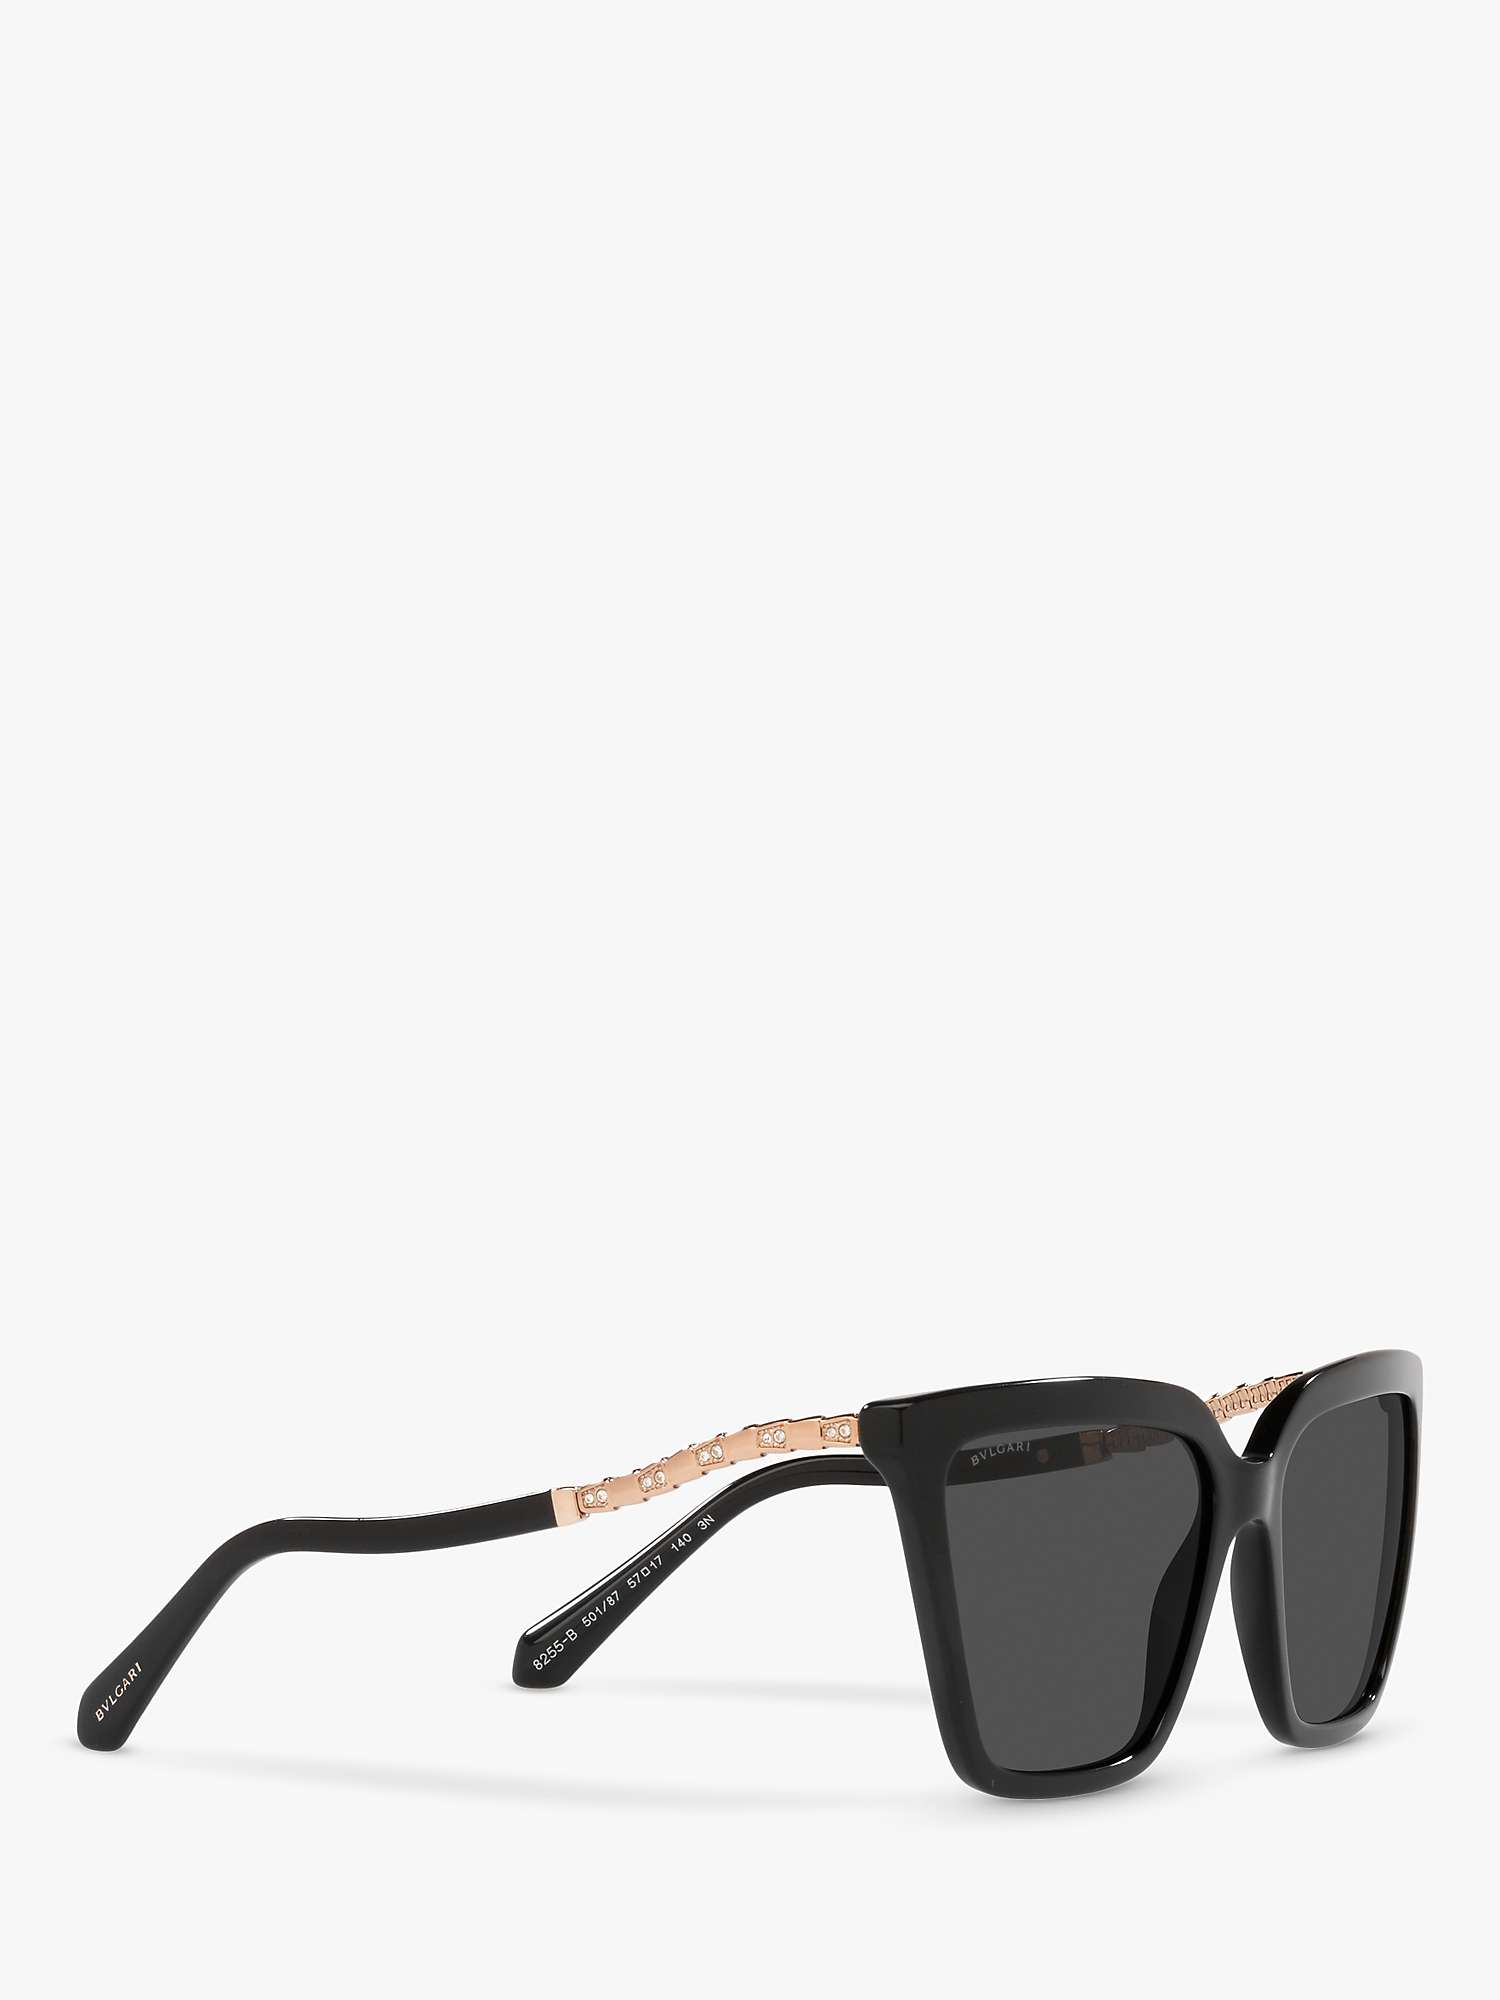 Buy BVLGARI BV8255B Women's Cat's Eye Sunglasses, Black/Grey Online at johnlewis.com